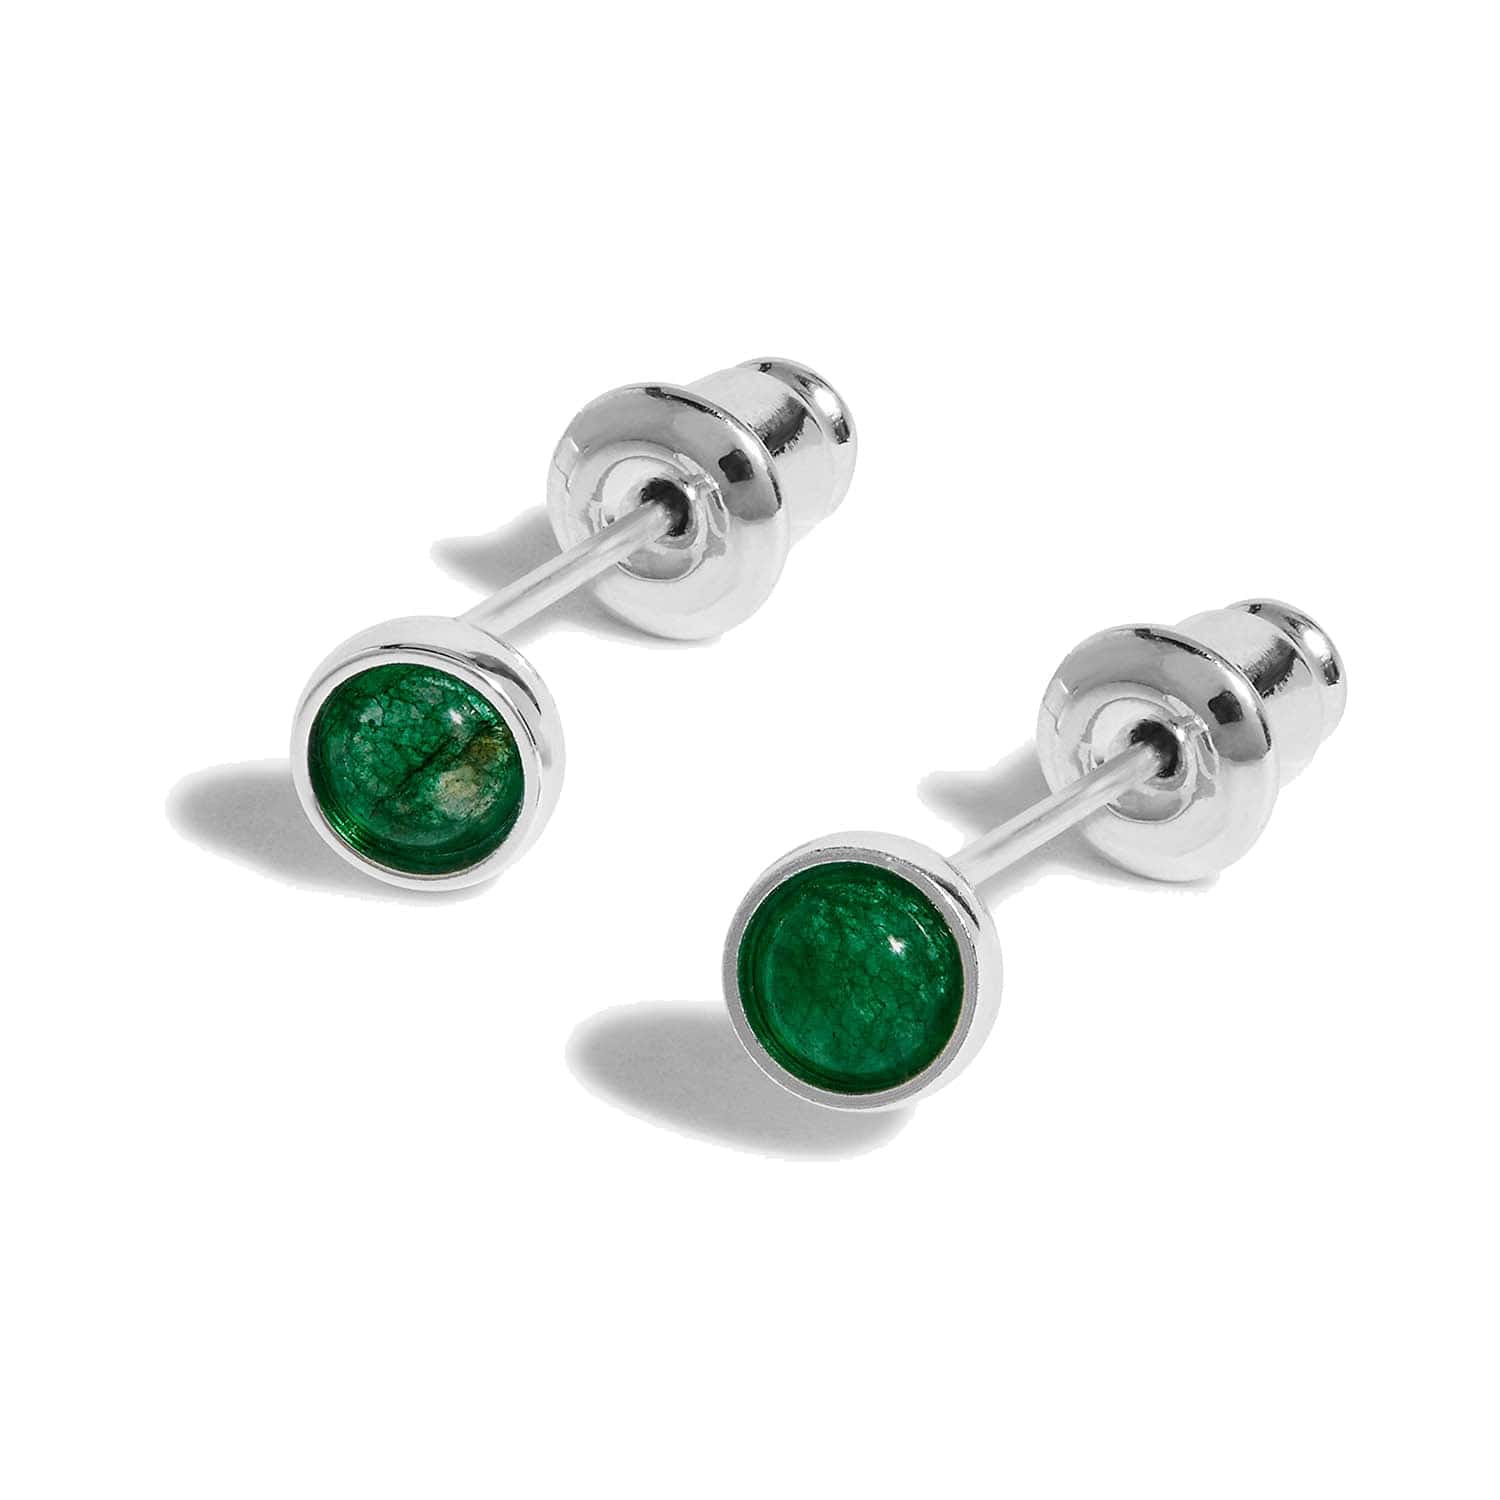 Joma Jewellery Earrings Joma Jewellery Boxed Earrings - Birthstone - May - Green Agate